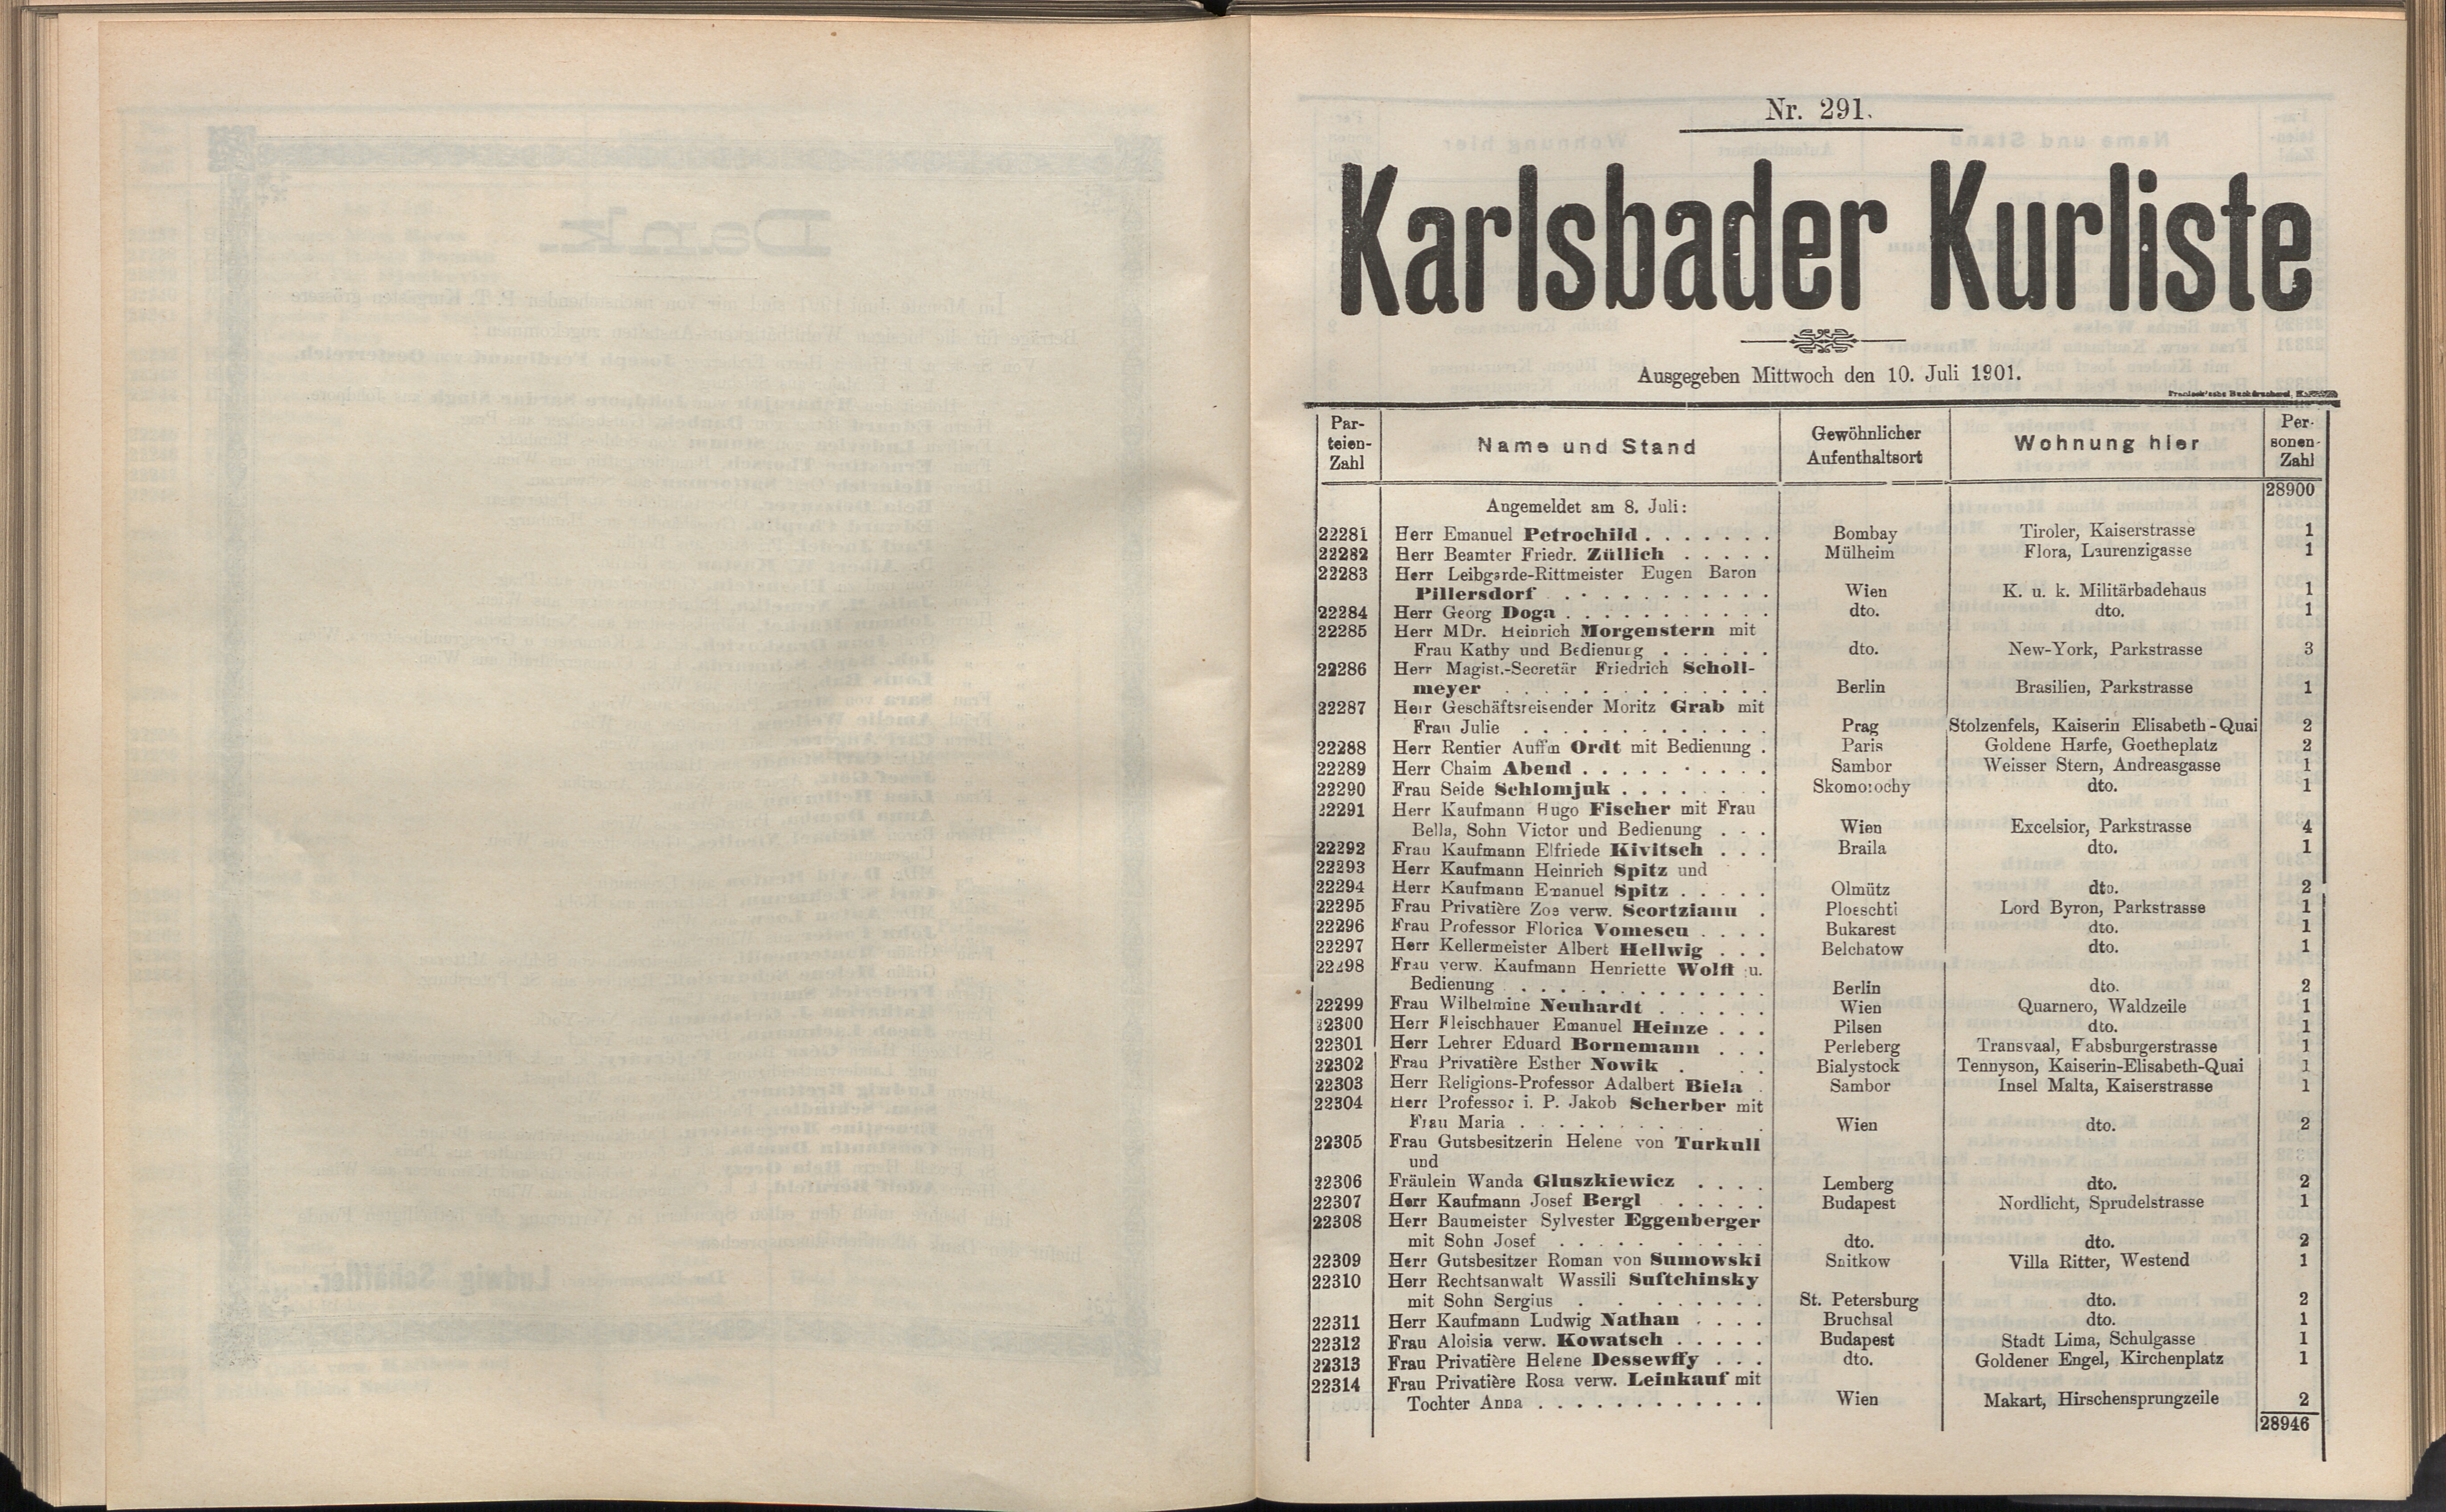 318. soap-kv_knihovna_karlsbader-kurliste-1901_3200